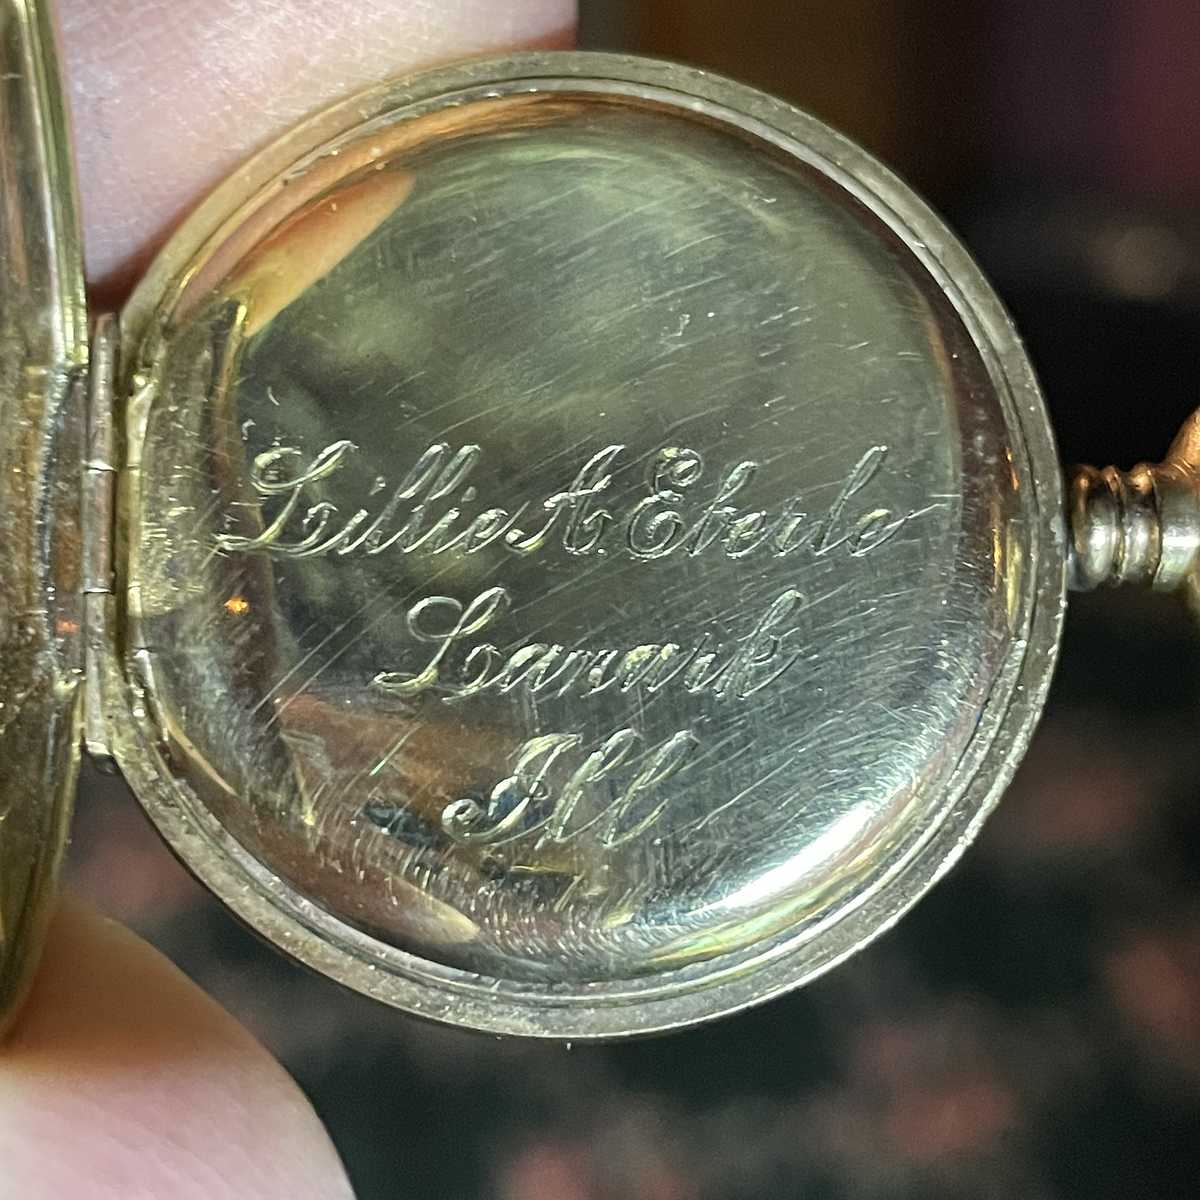 1911 South Bend Watch Grade 110 Inscription on the original pocket watch case